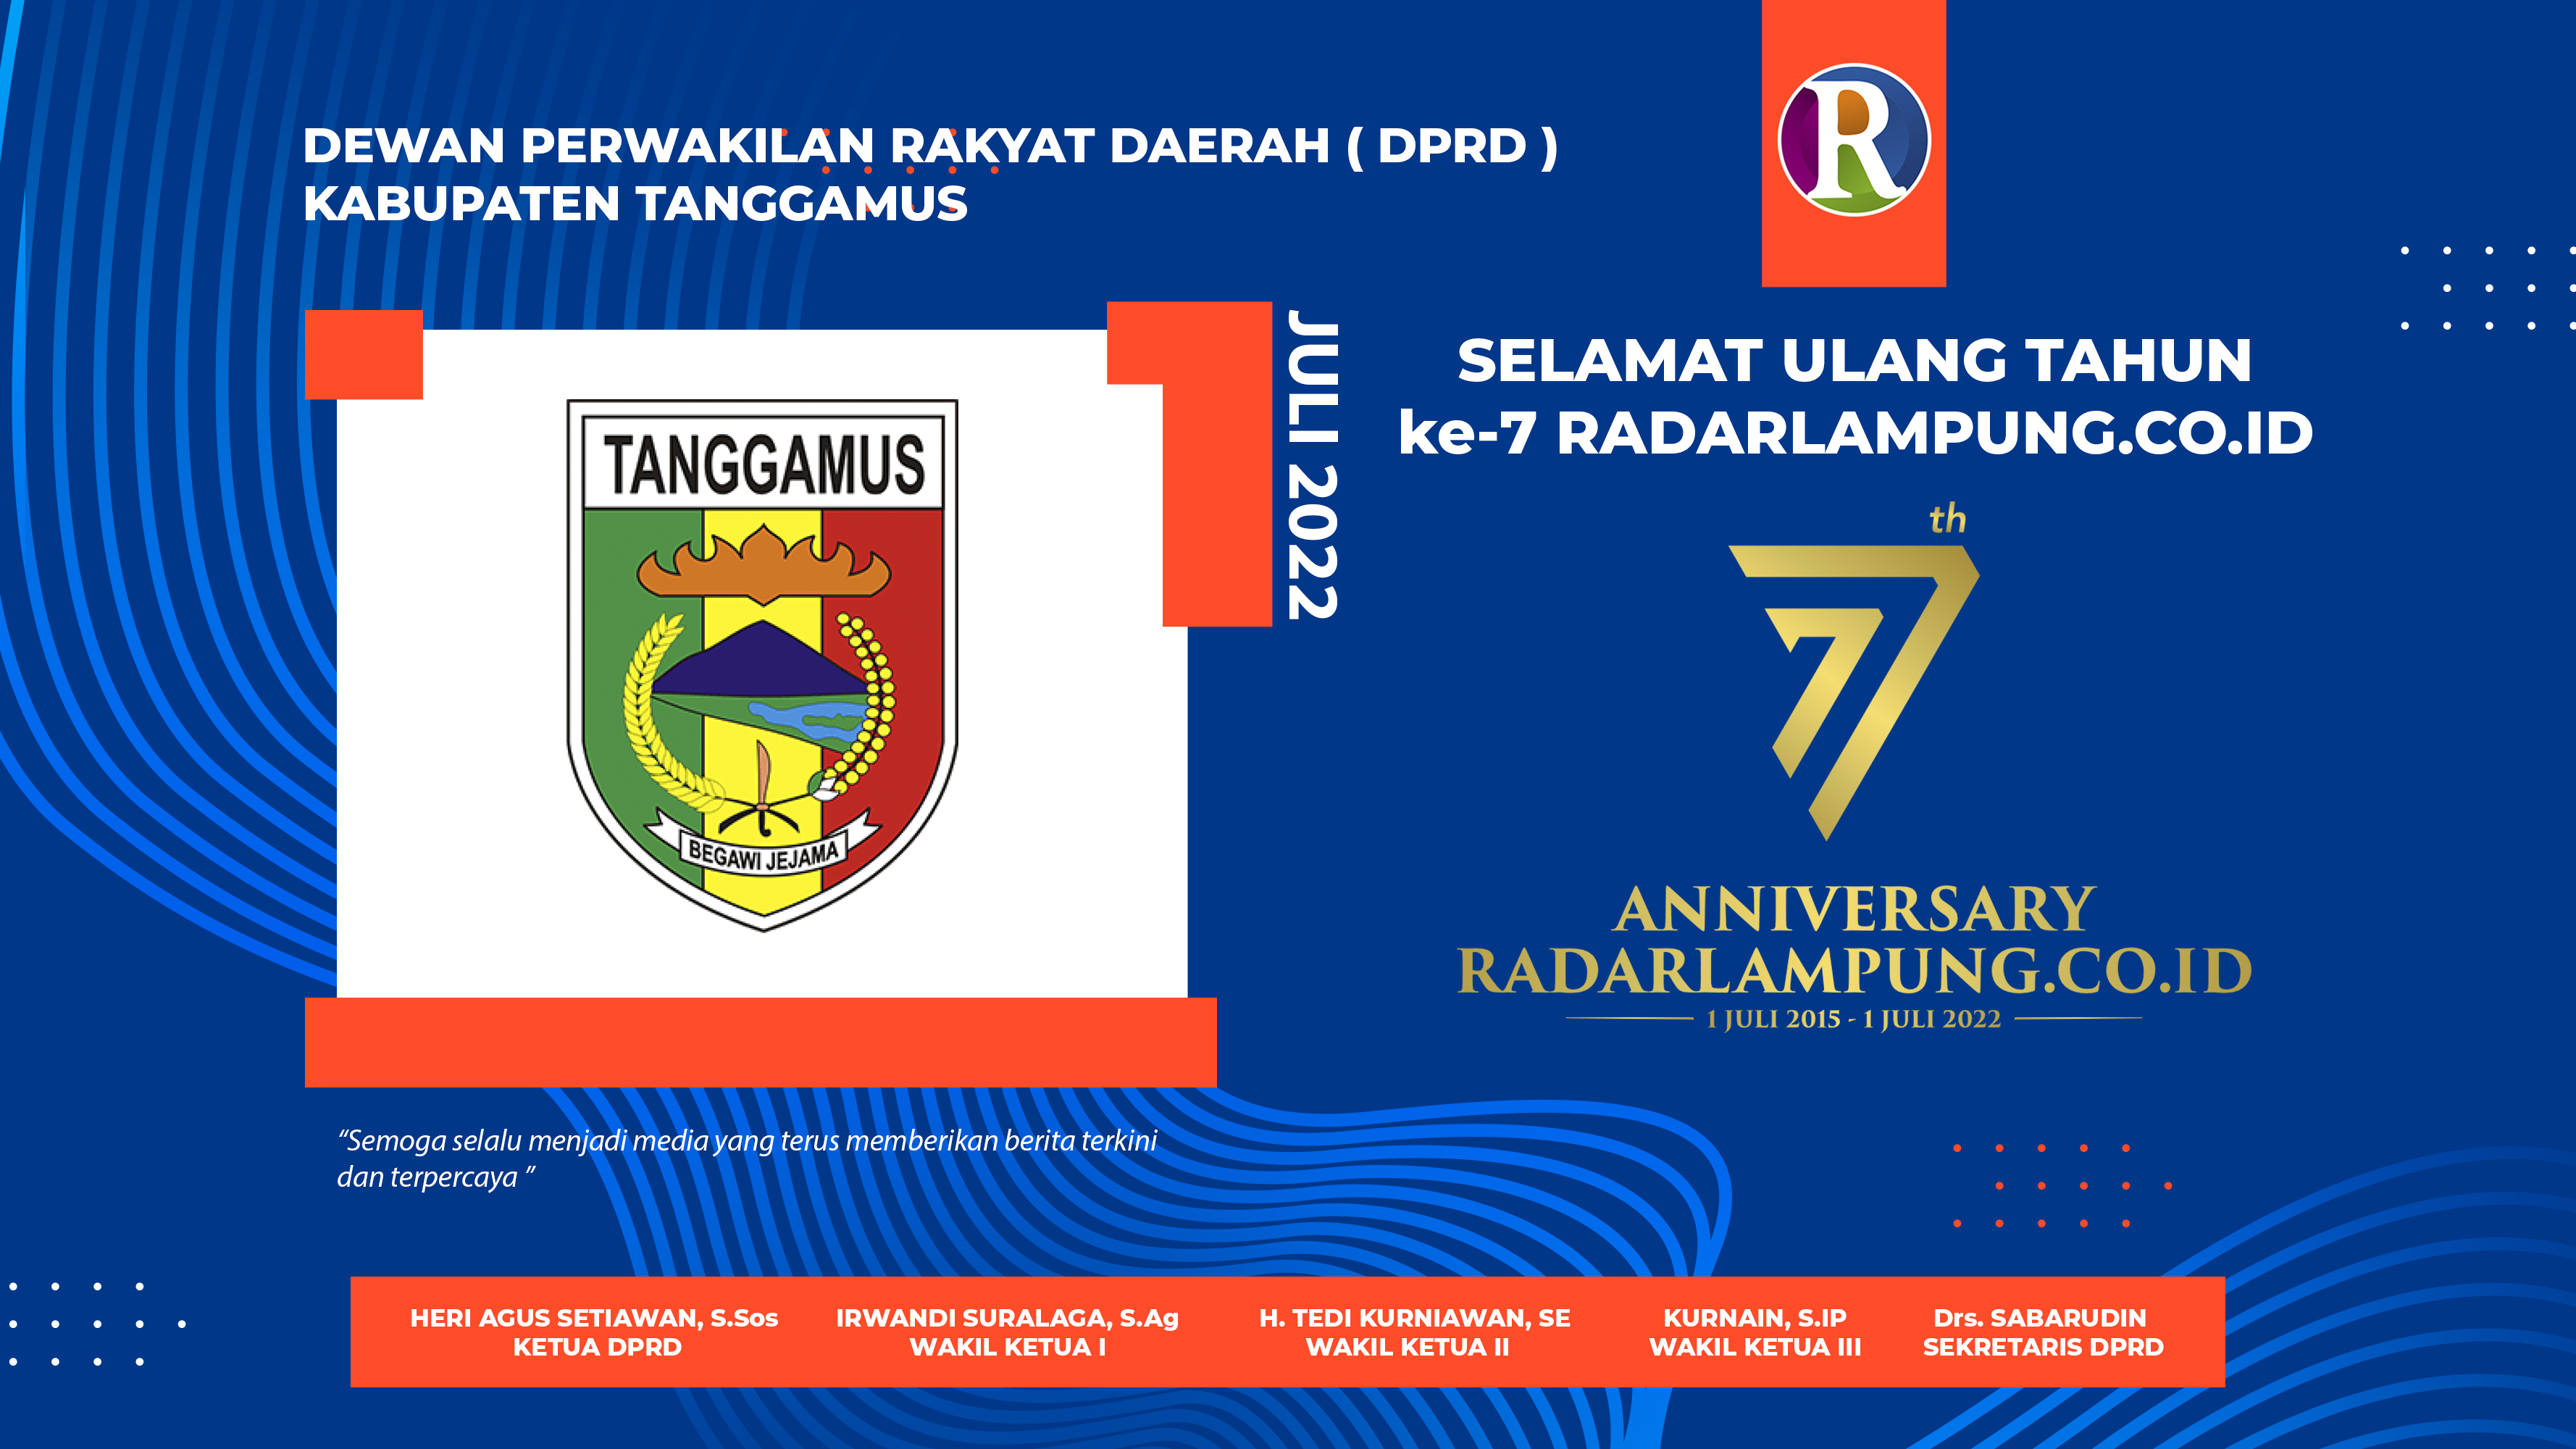 DPRD Kabupaten Tanggamus Mengucapkan Selamat Ulang Tahun ke-7 Radarlampung.co.id